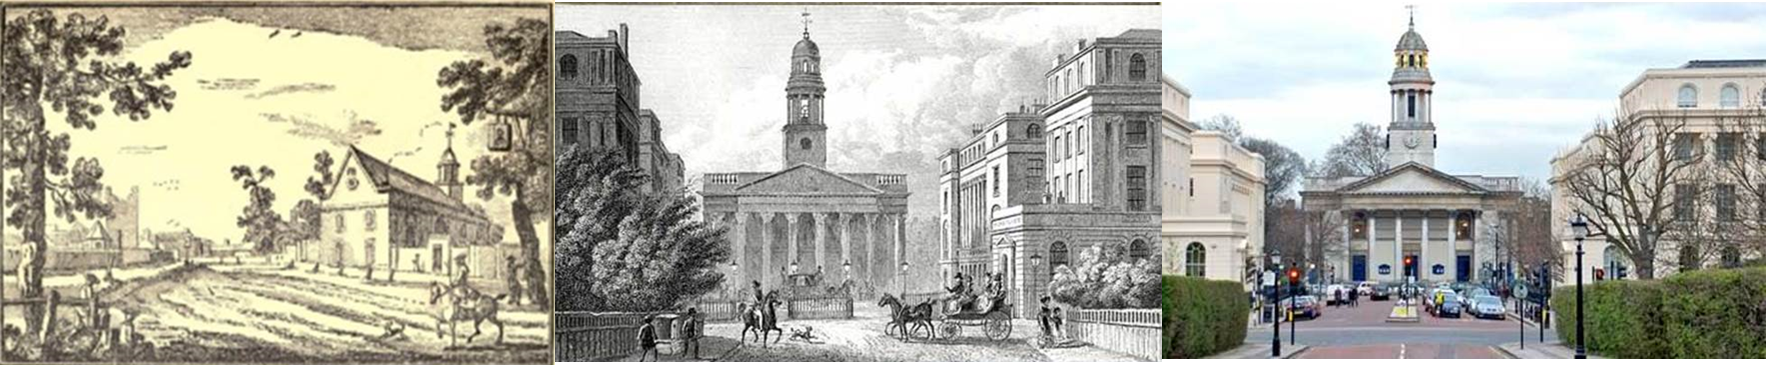 St Marylebone church 1750, 1814 (rebuilt), 2014